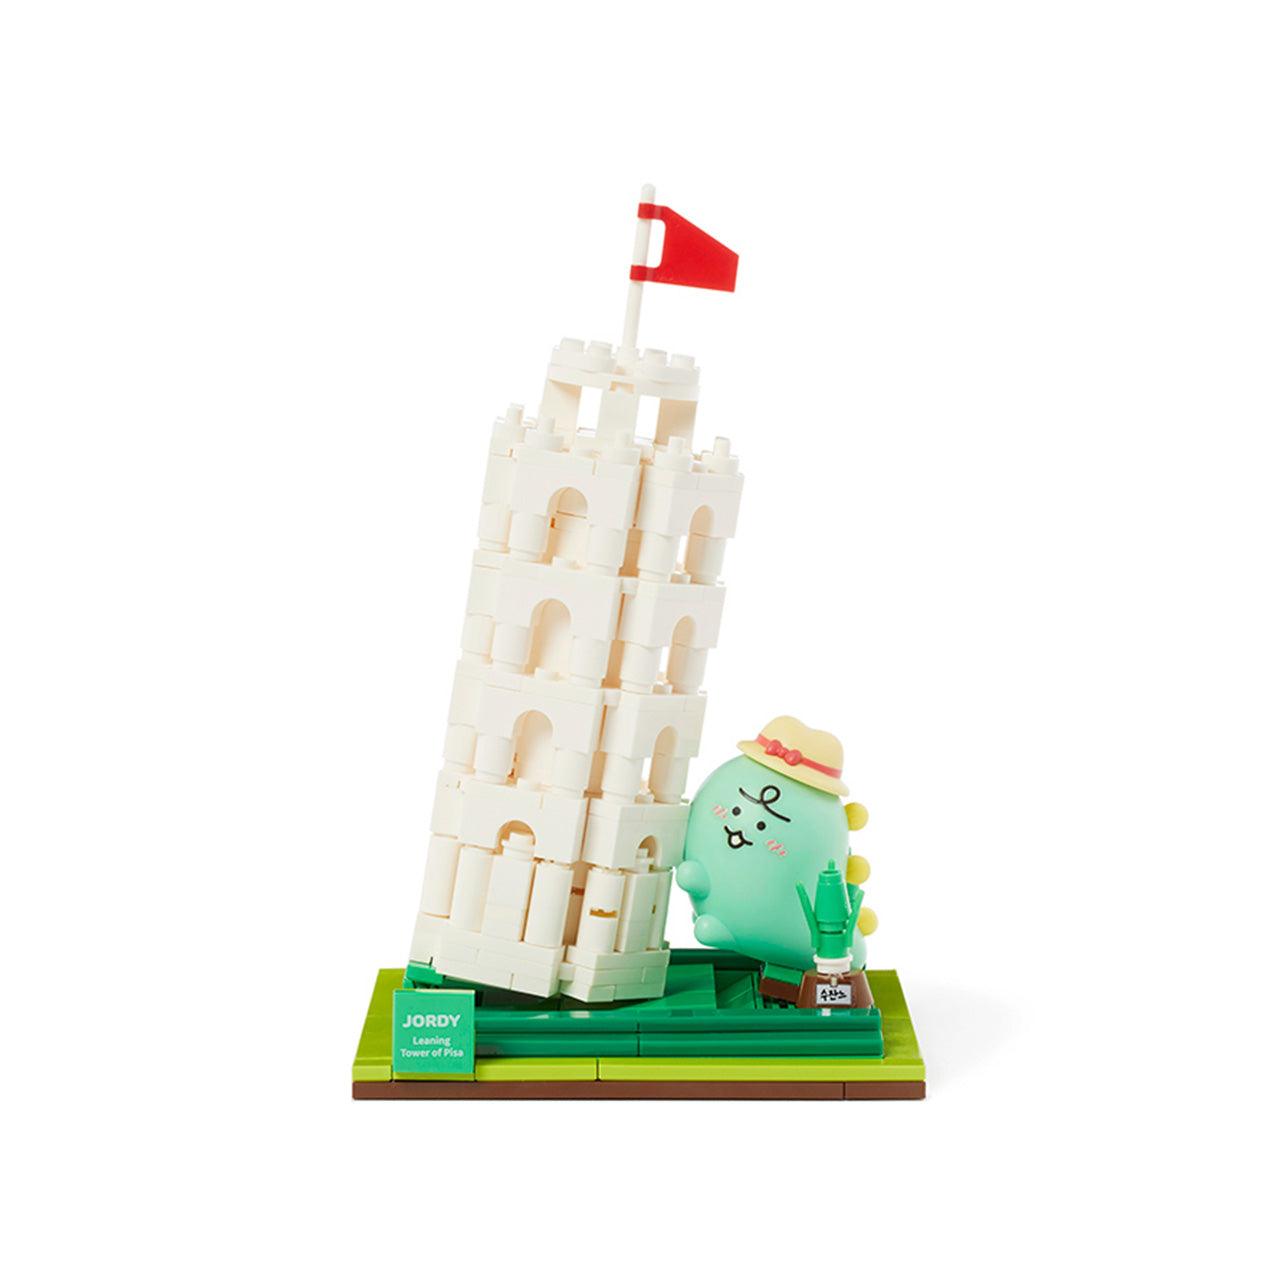 Kakao Friends Jordy Landmark Brick Figure 比薩斜塔模型 - SOUL SIMPLE HK